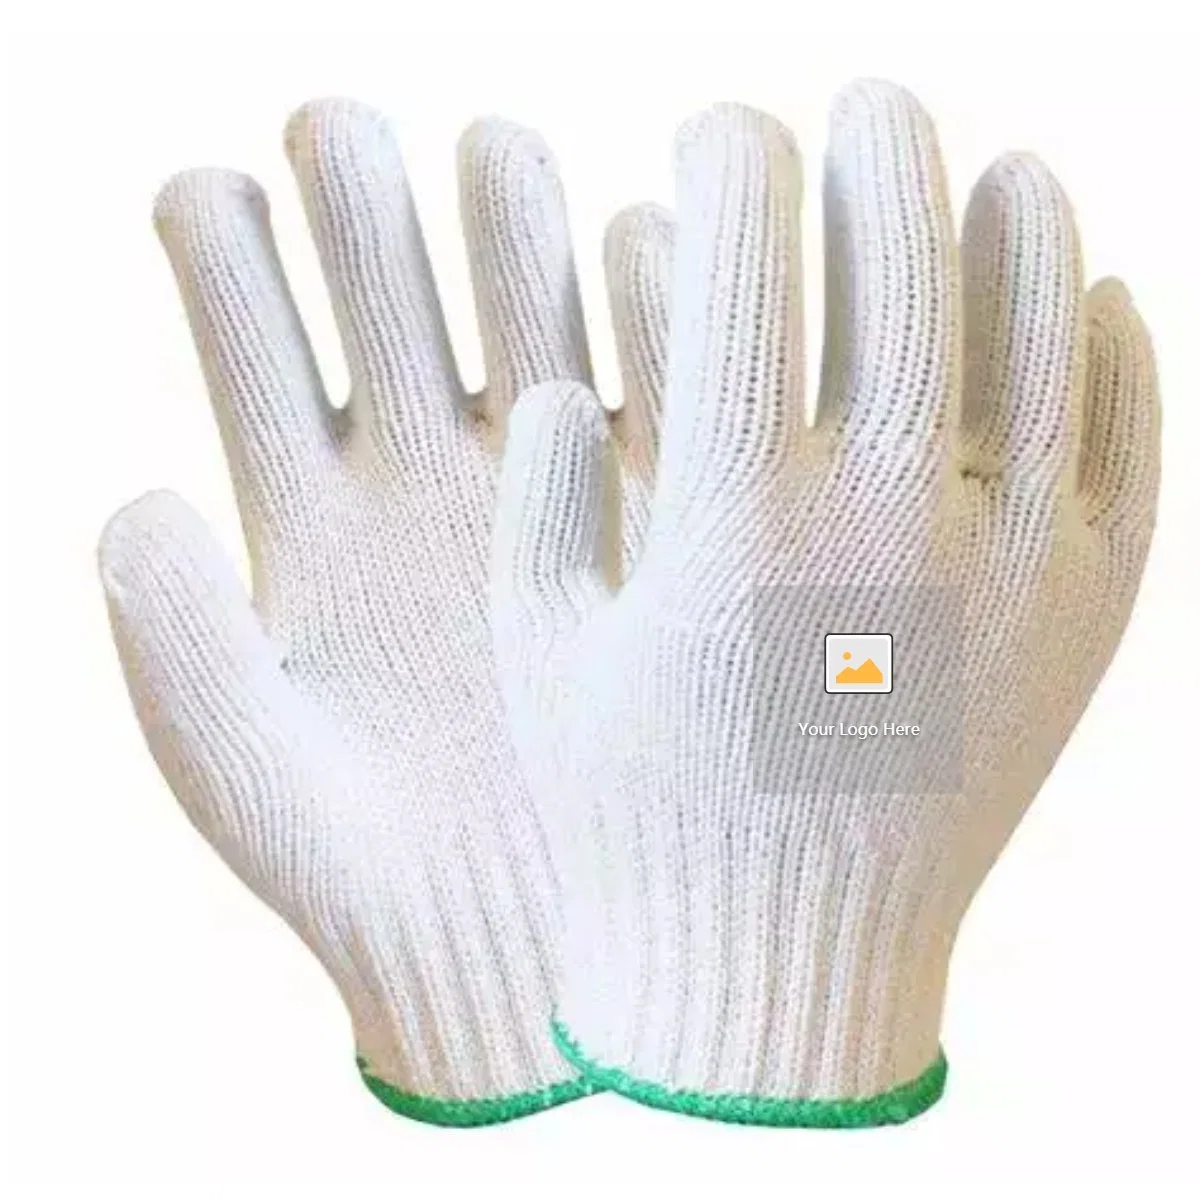 Cheap White Cotton Knitted Safety Working Gloves Industrial Work Glove